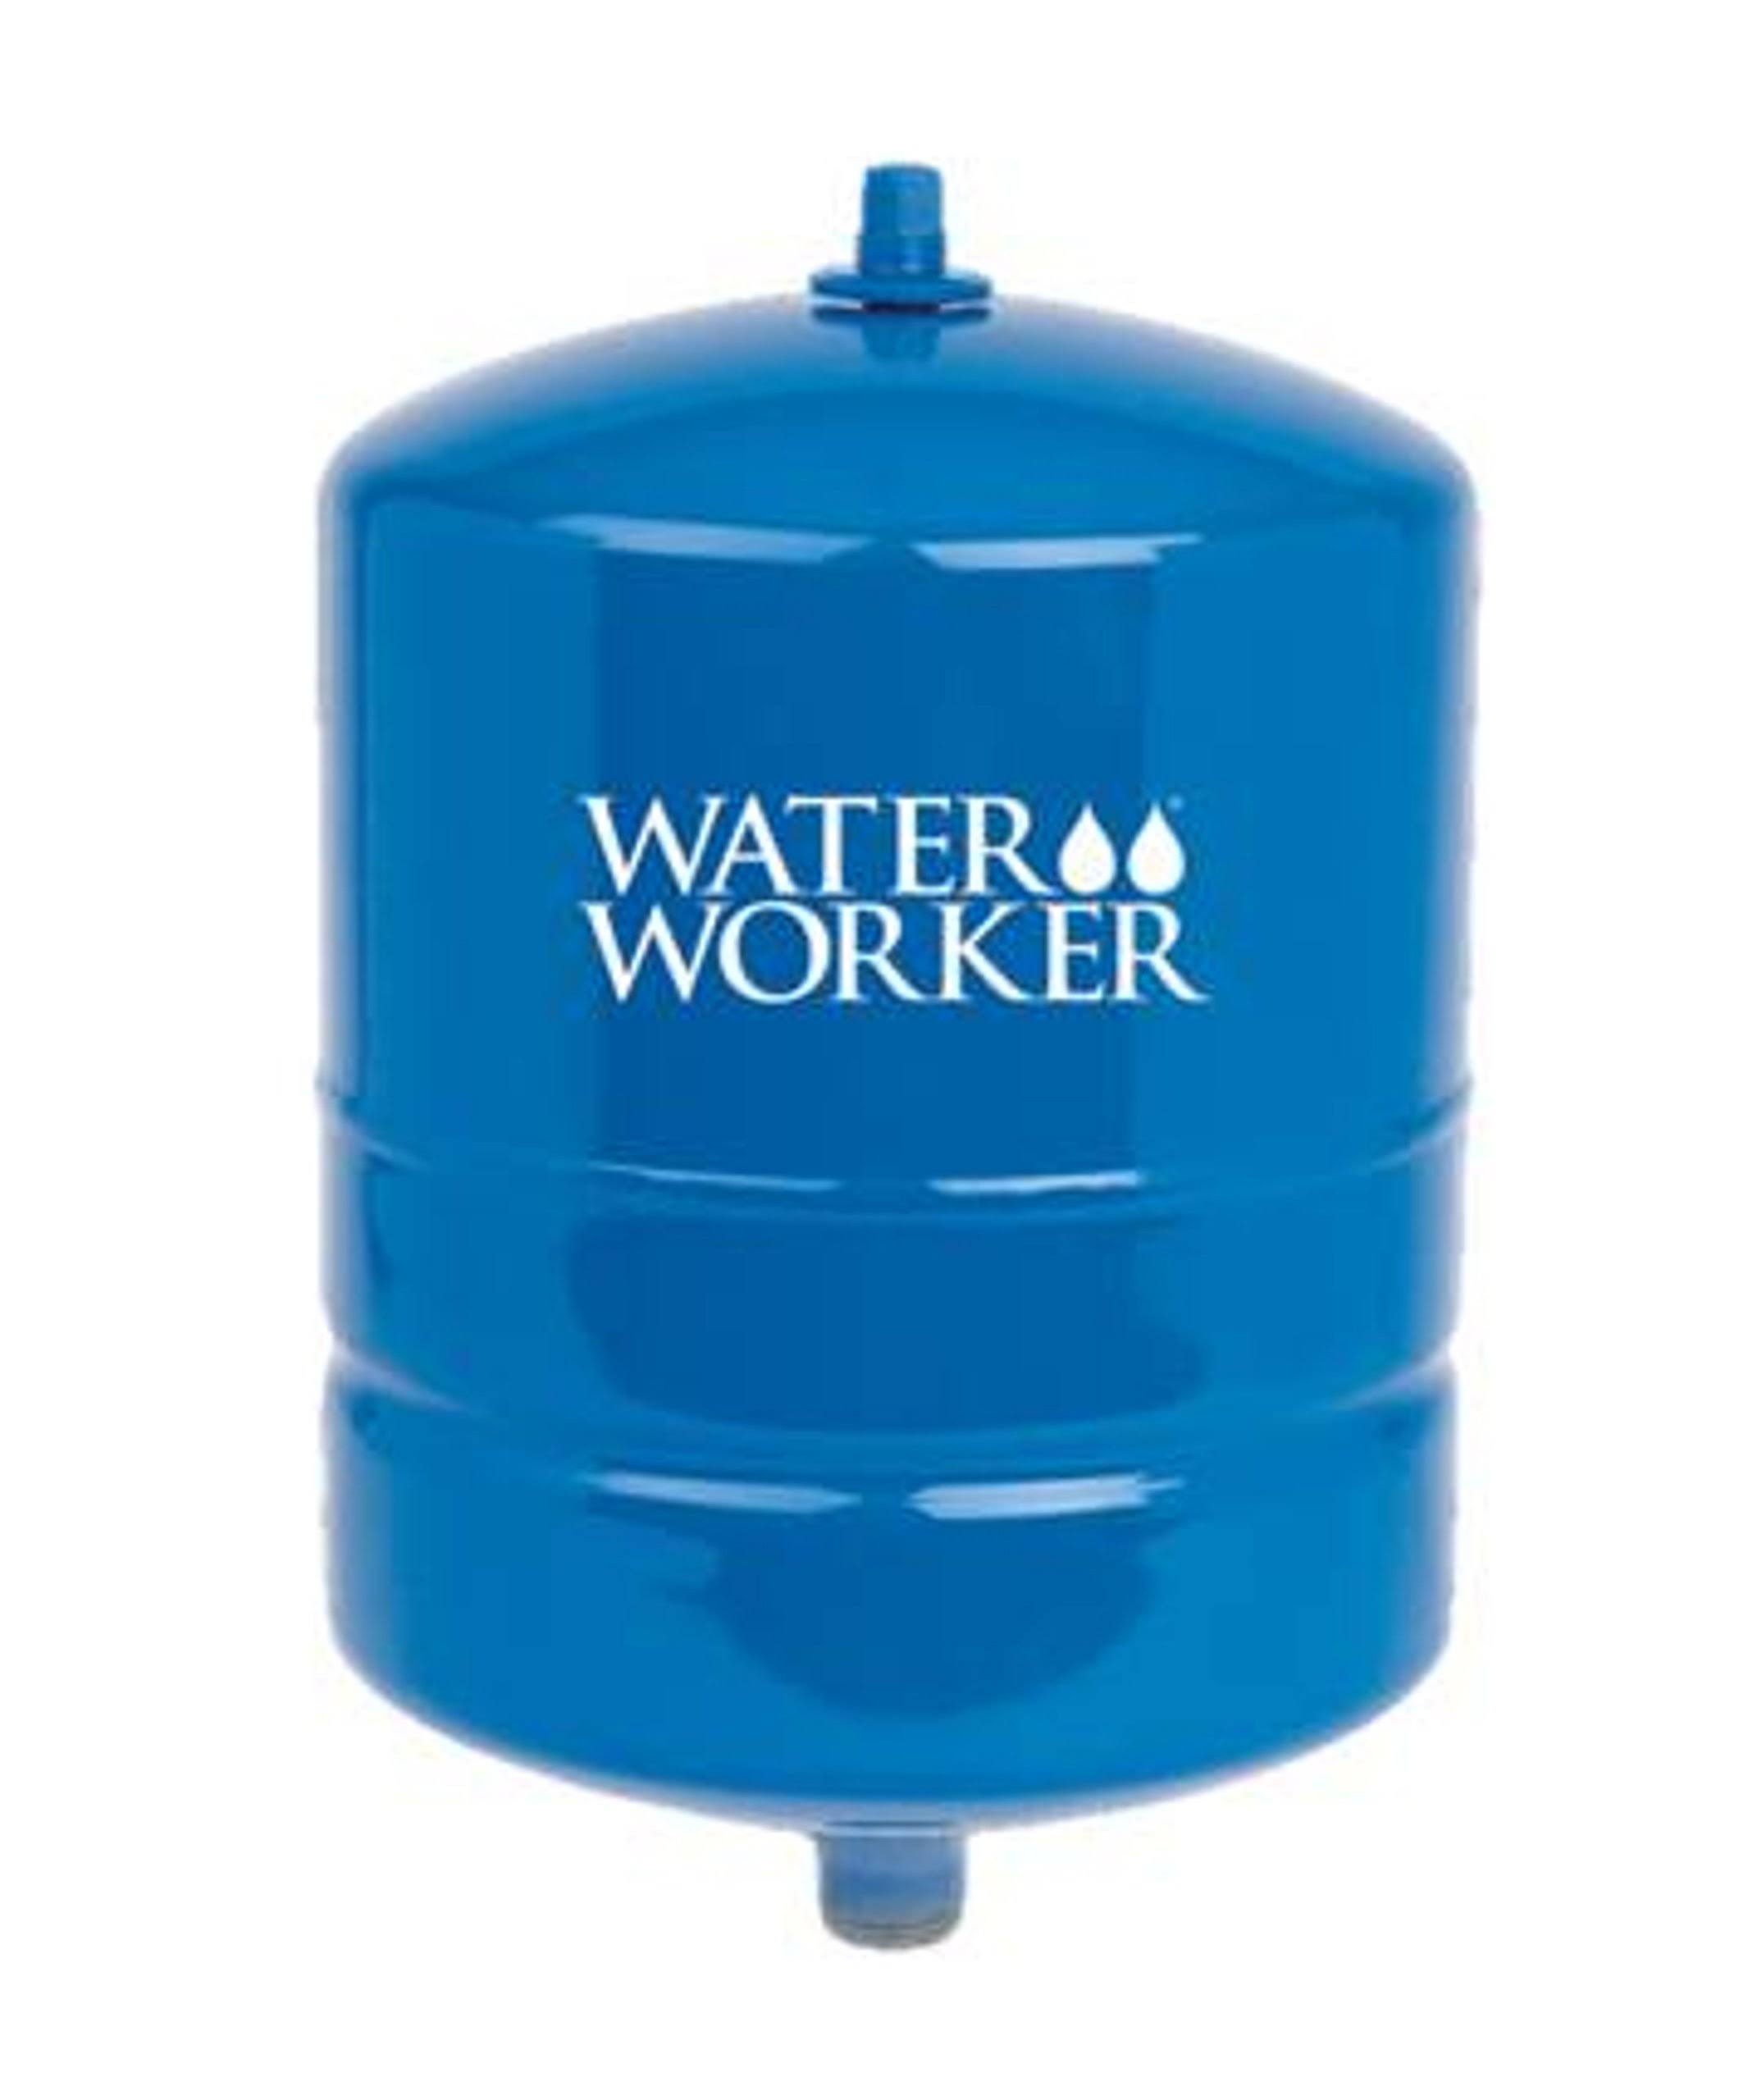 Water Worker HT4B Pressurized Well Tank - Blue, 4gal